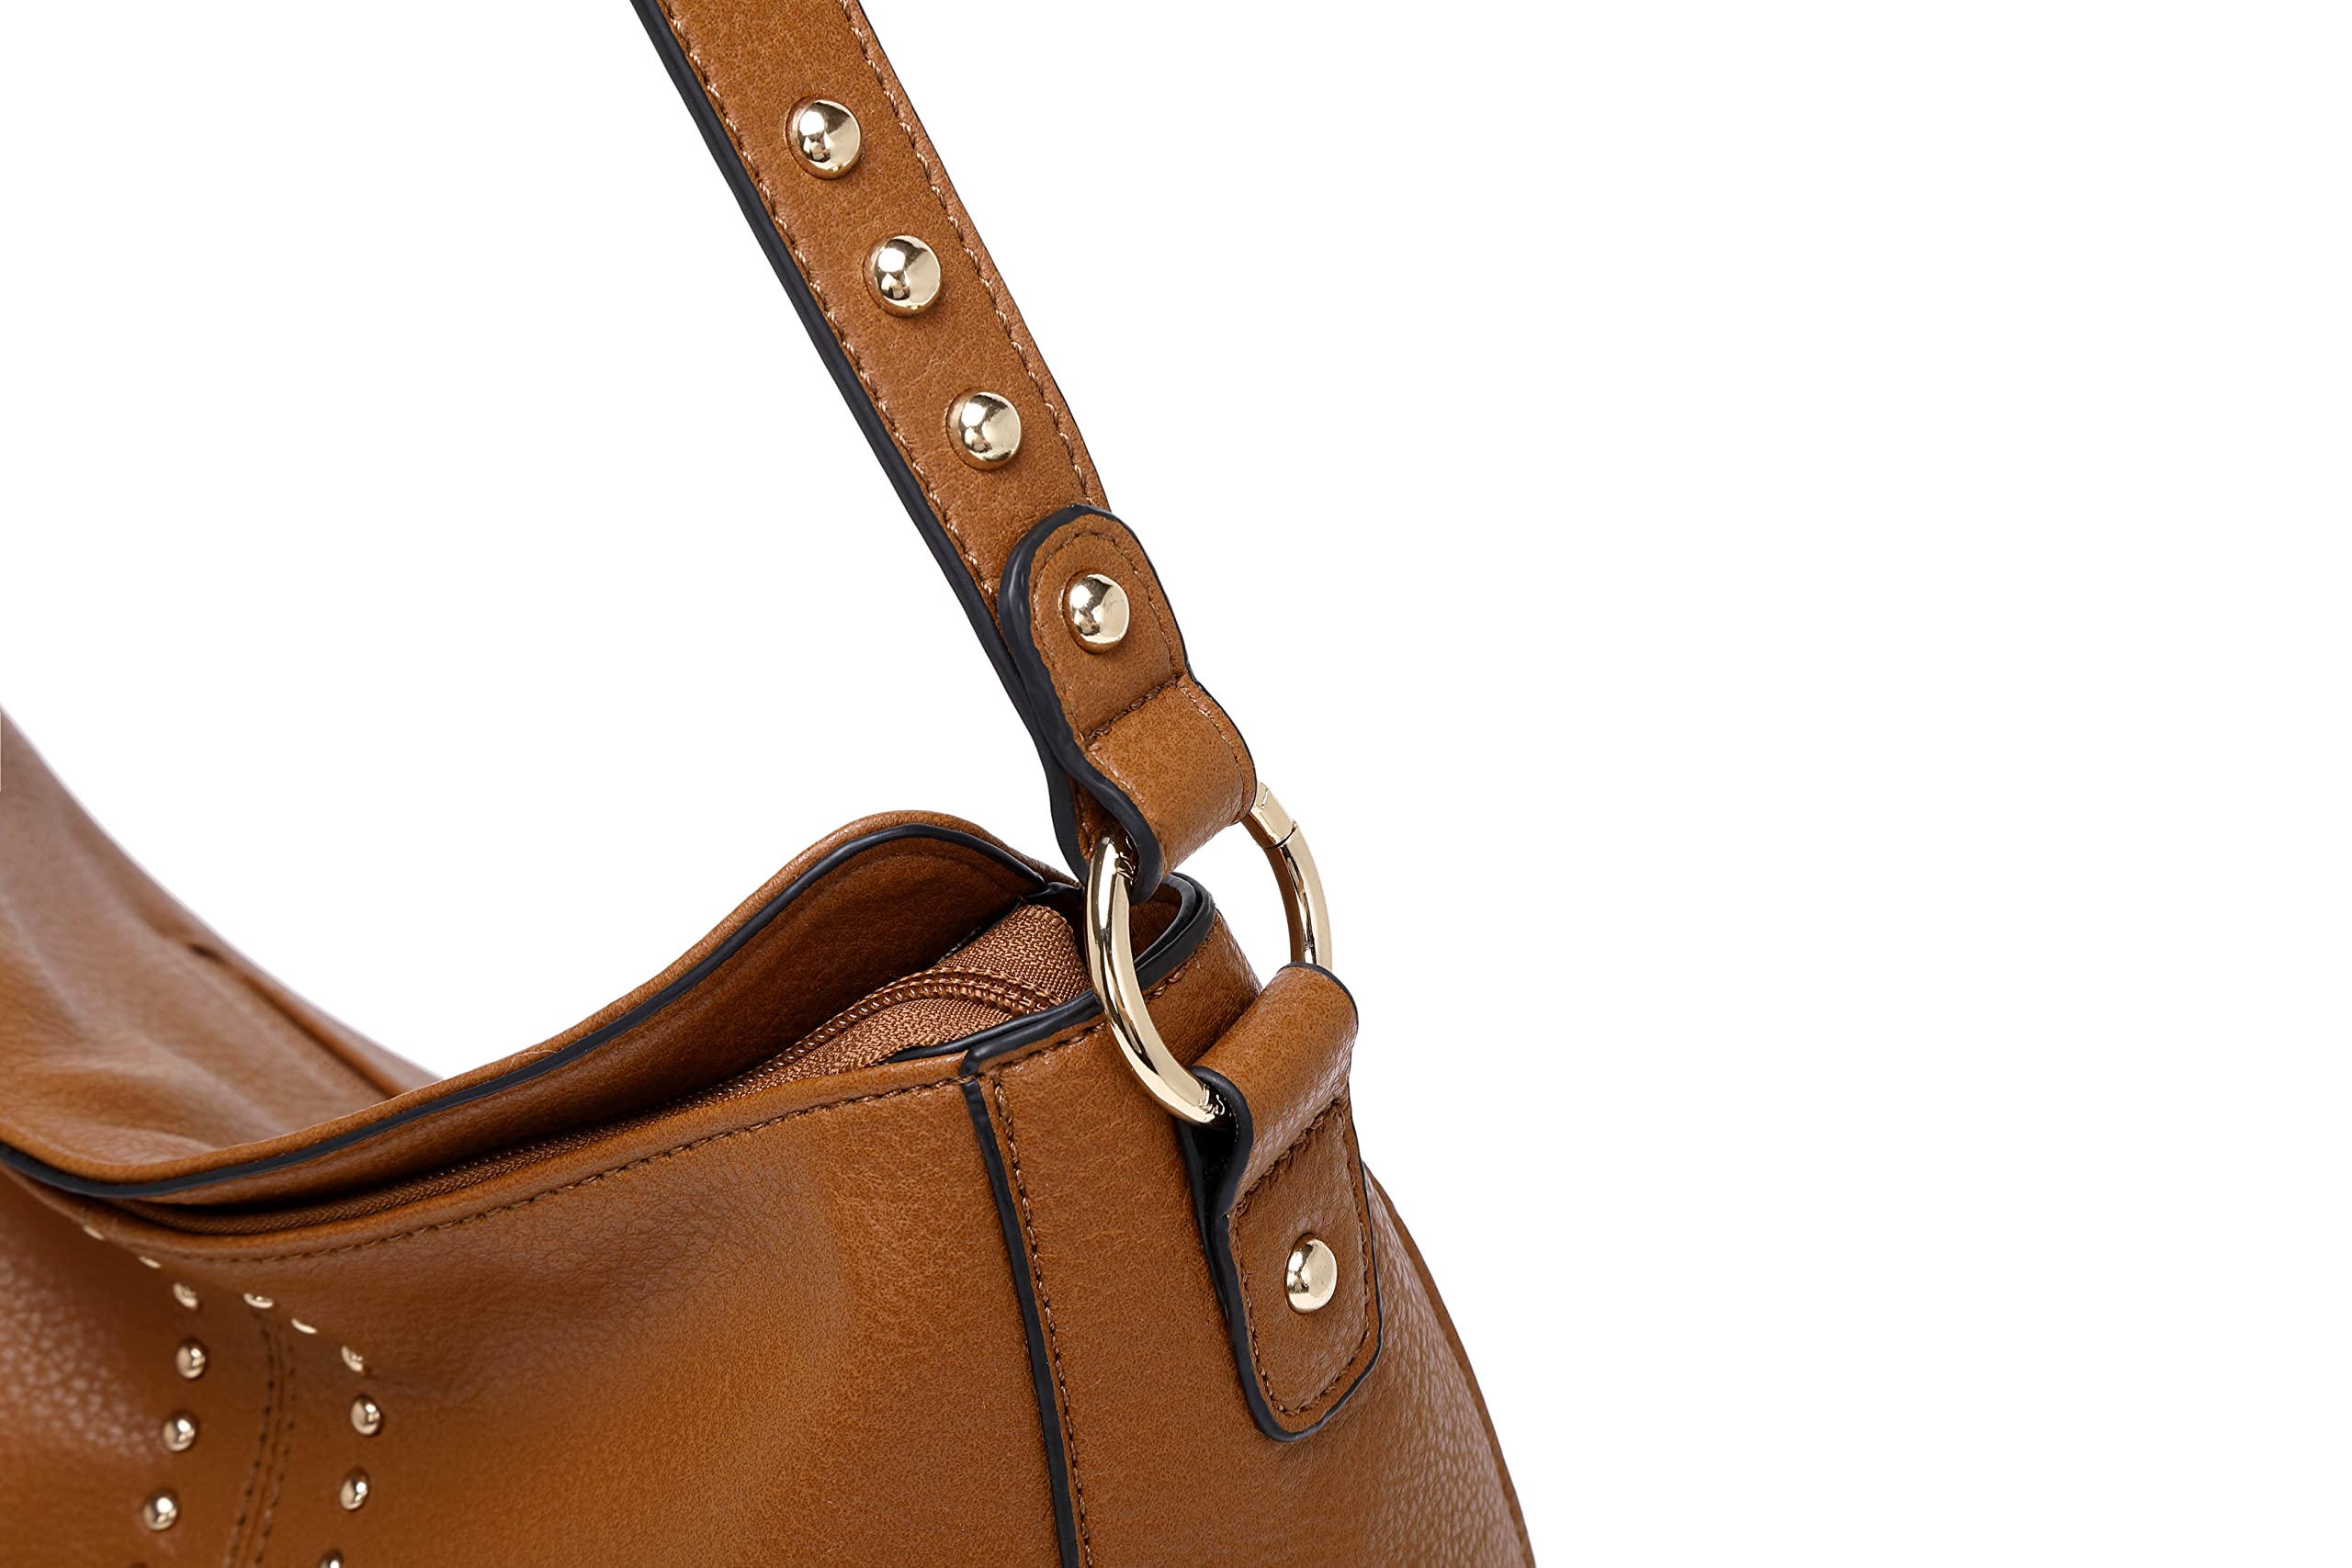 Montana West Hobo Bag for Women Handbags Crossbody Leather Purse Ladies Chic Shoulder Bag